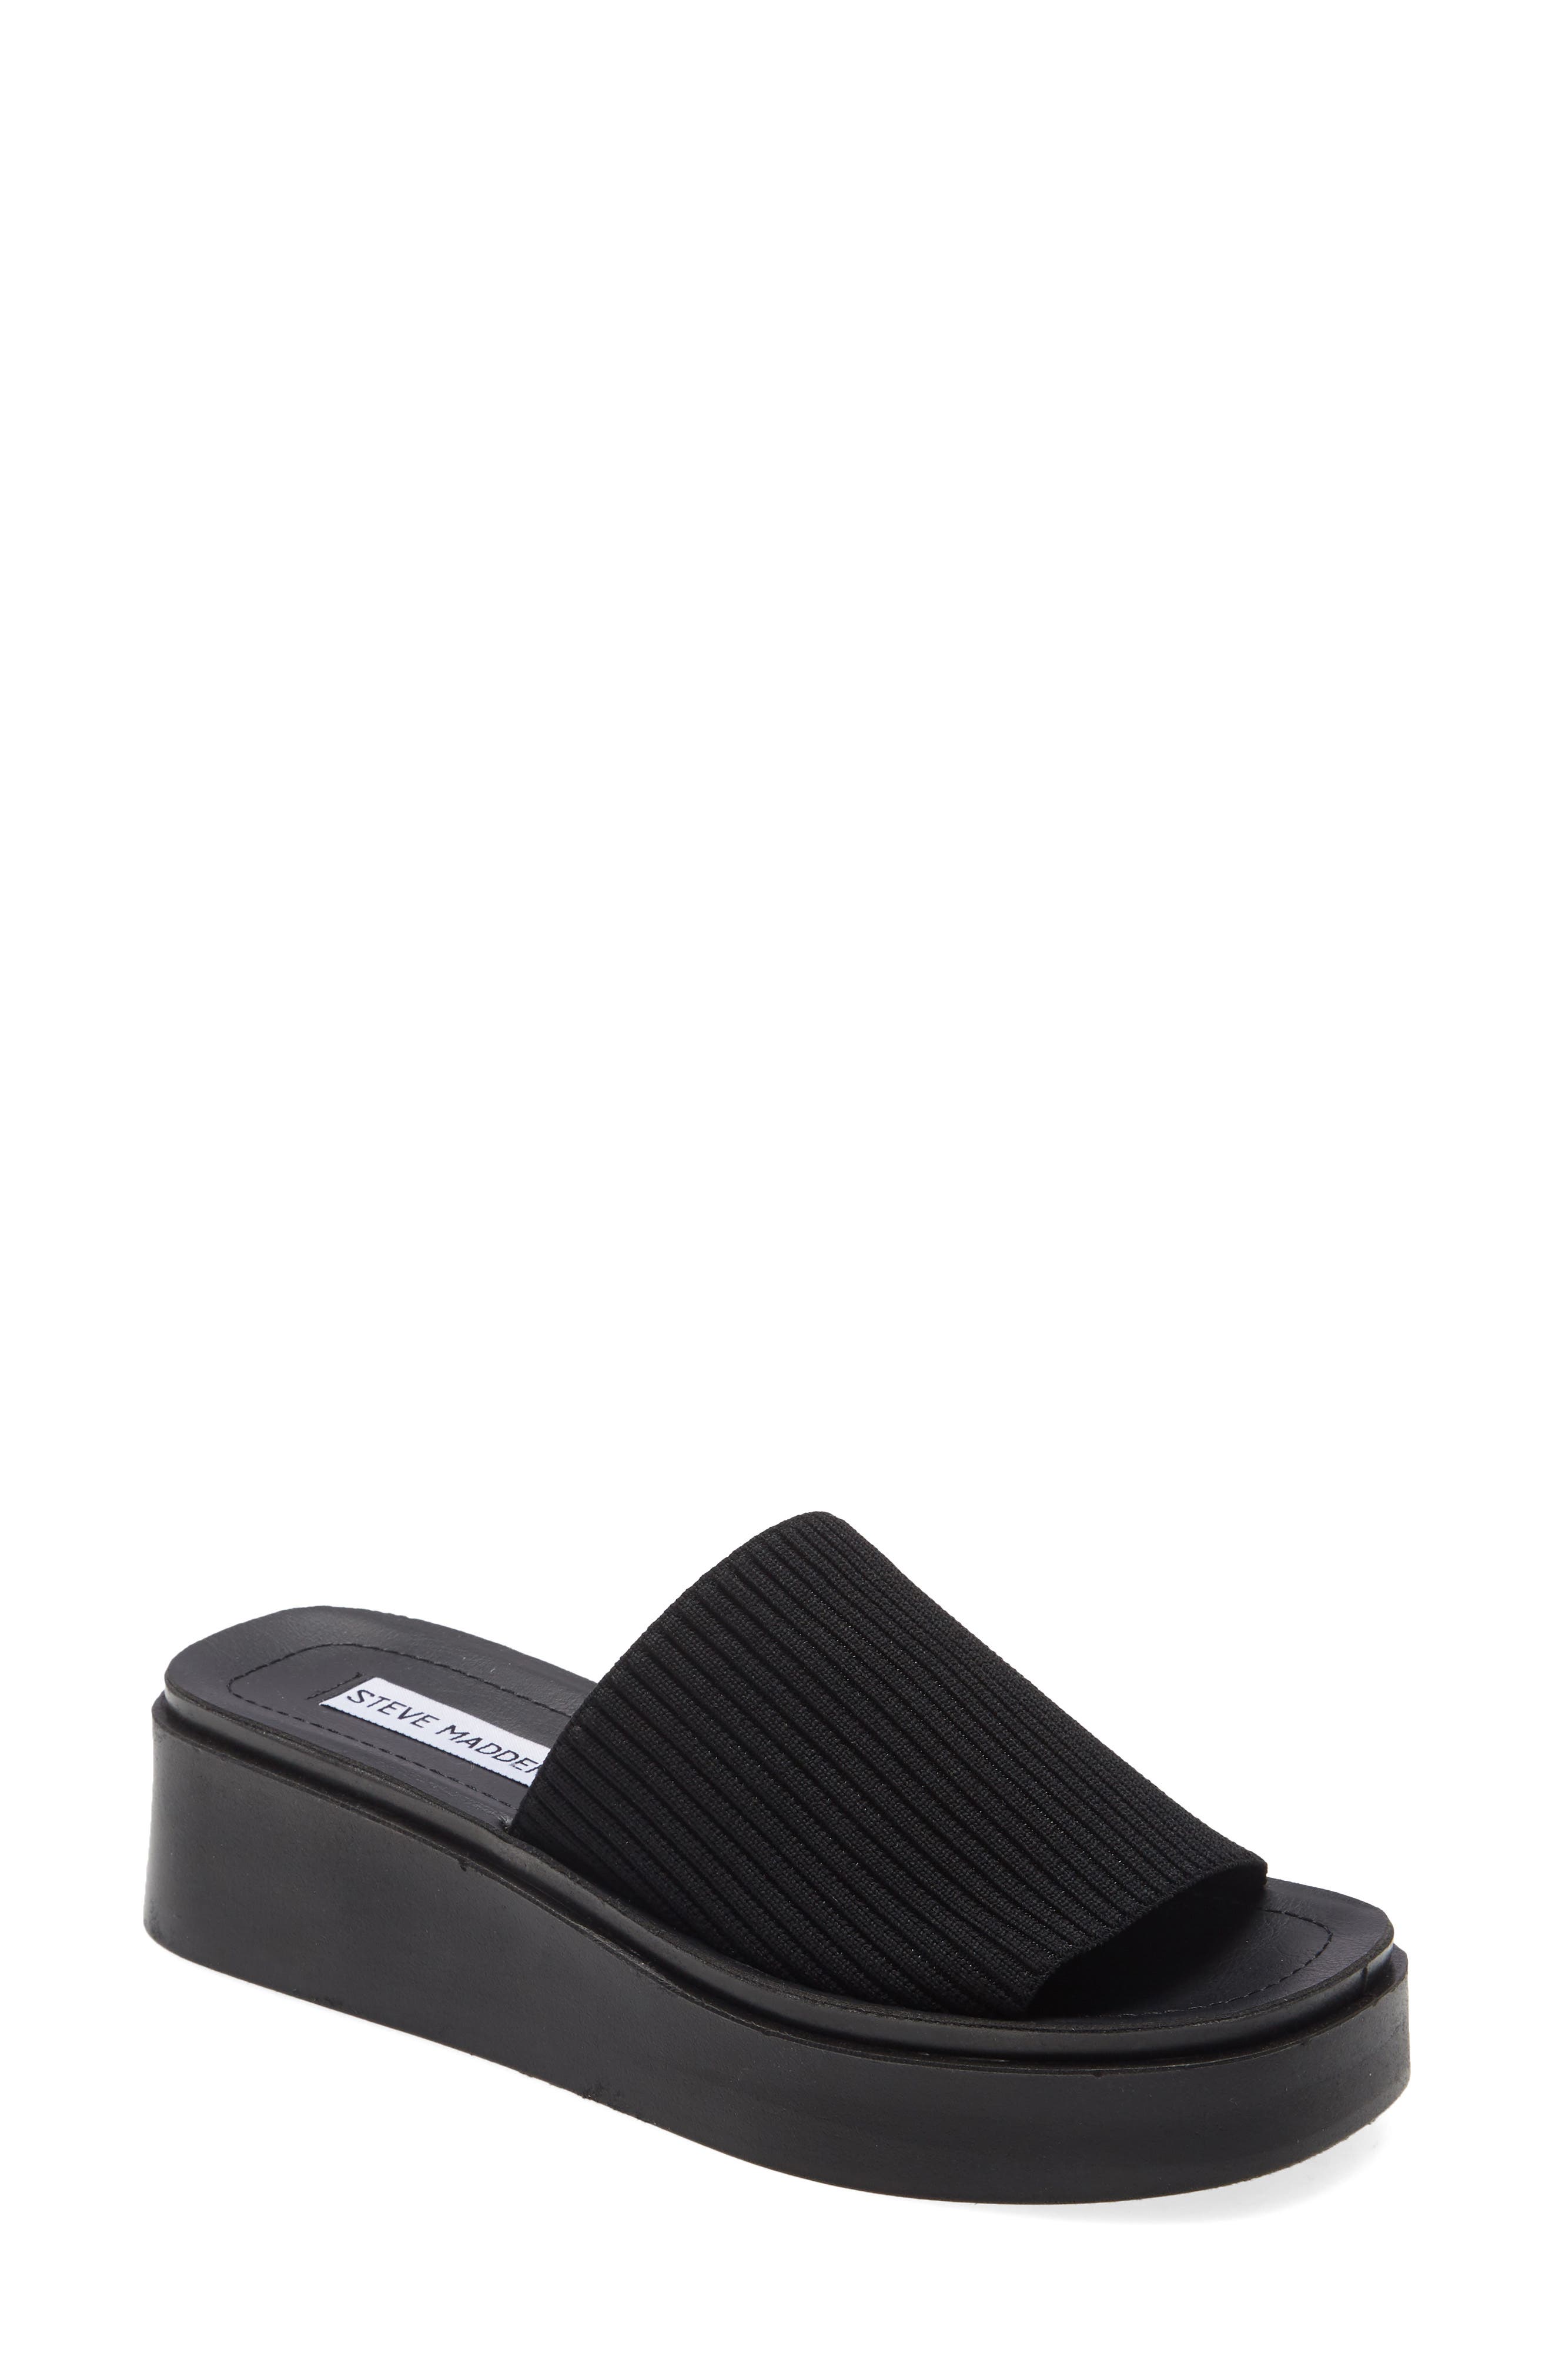 Buy > steve madden platform wedge sandals > in stock